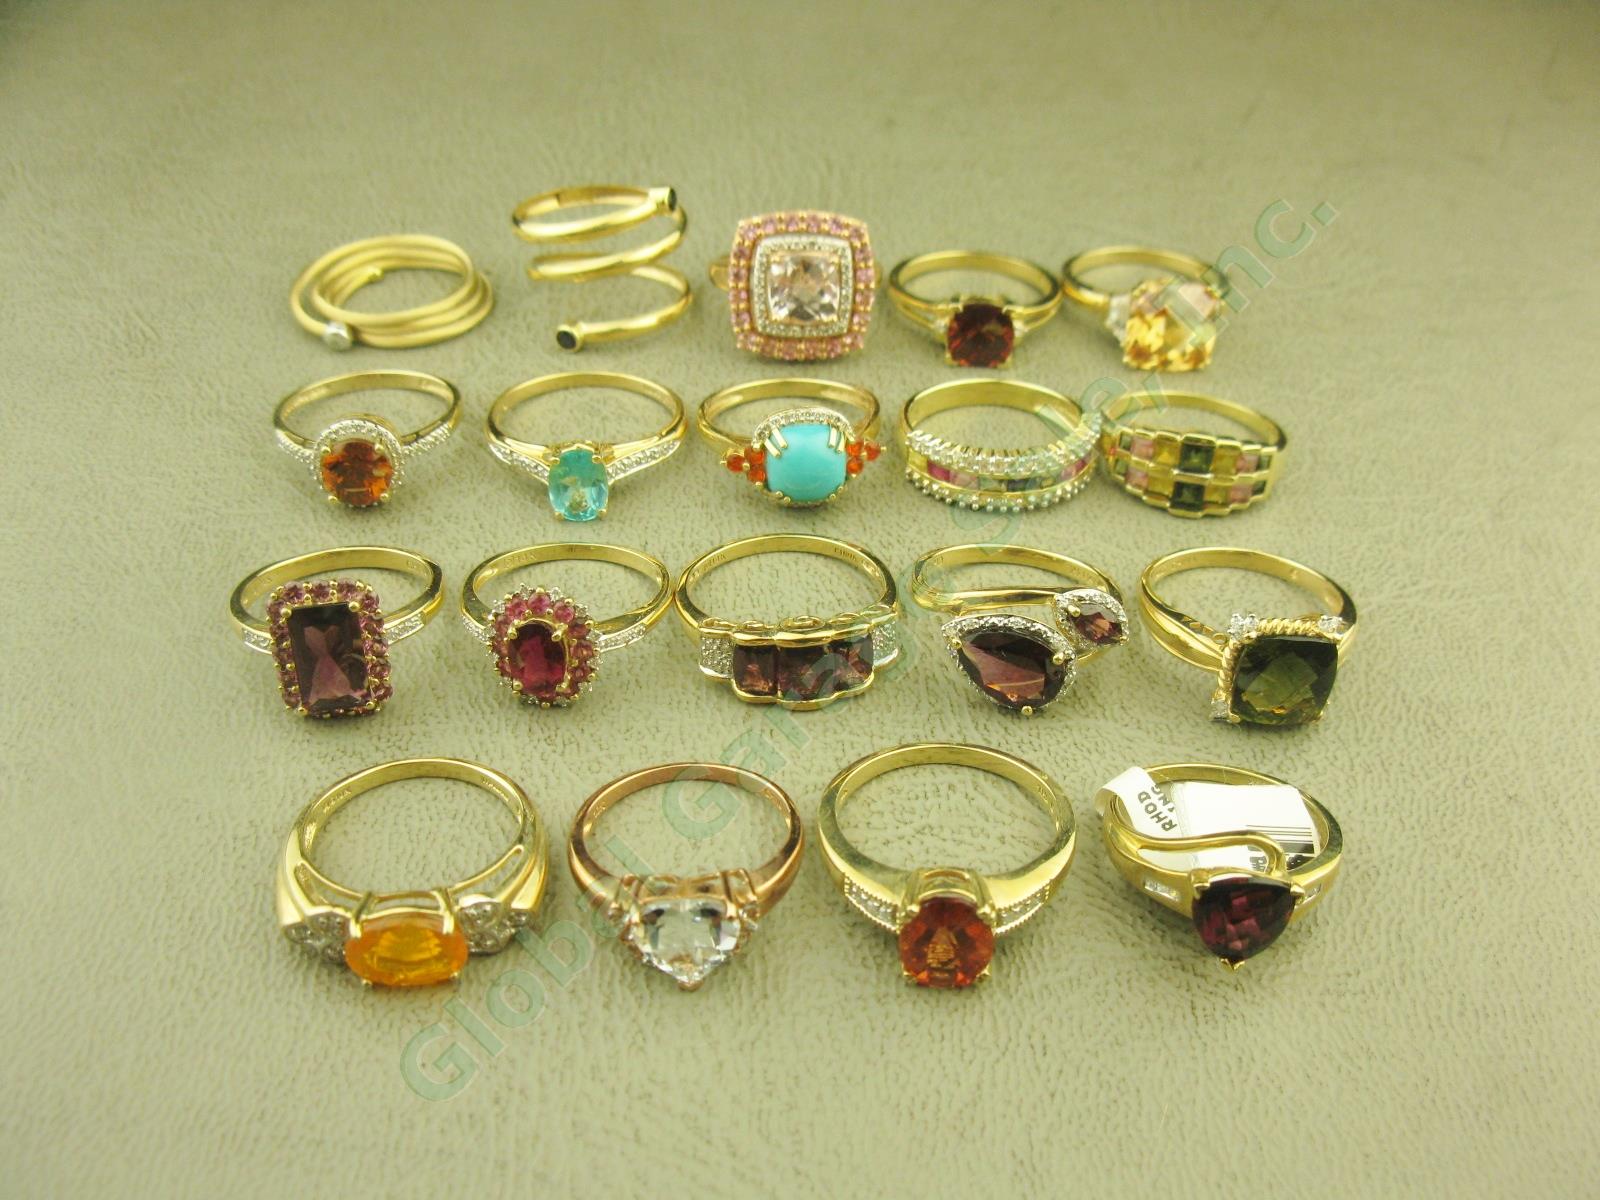 19x 14k 10k Gold Gemstone Rings Lot Earrings 57.7 Grams Not Scrap $1200+ Value!!